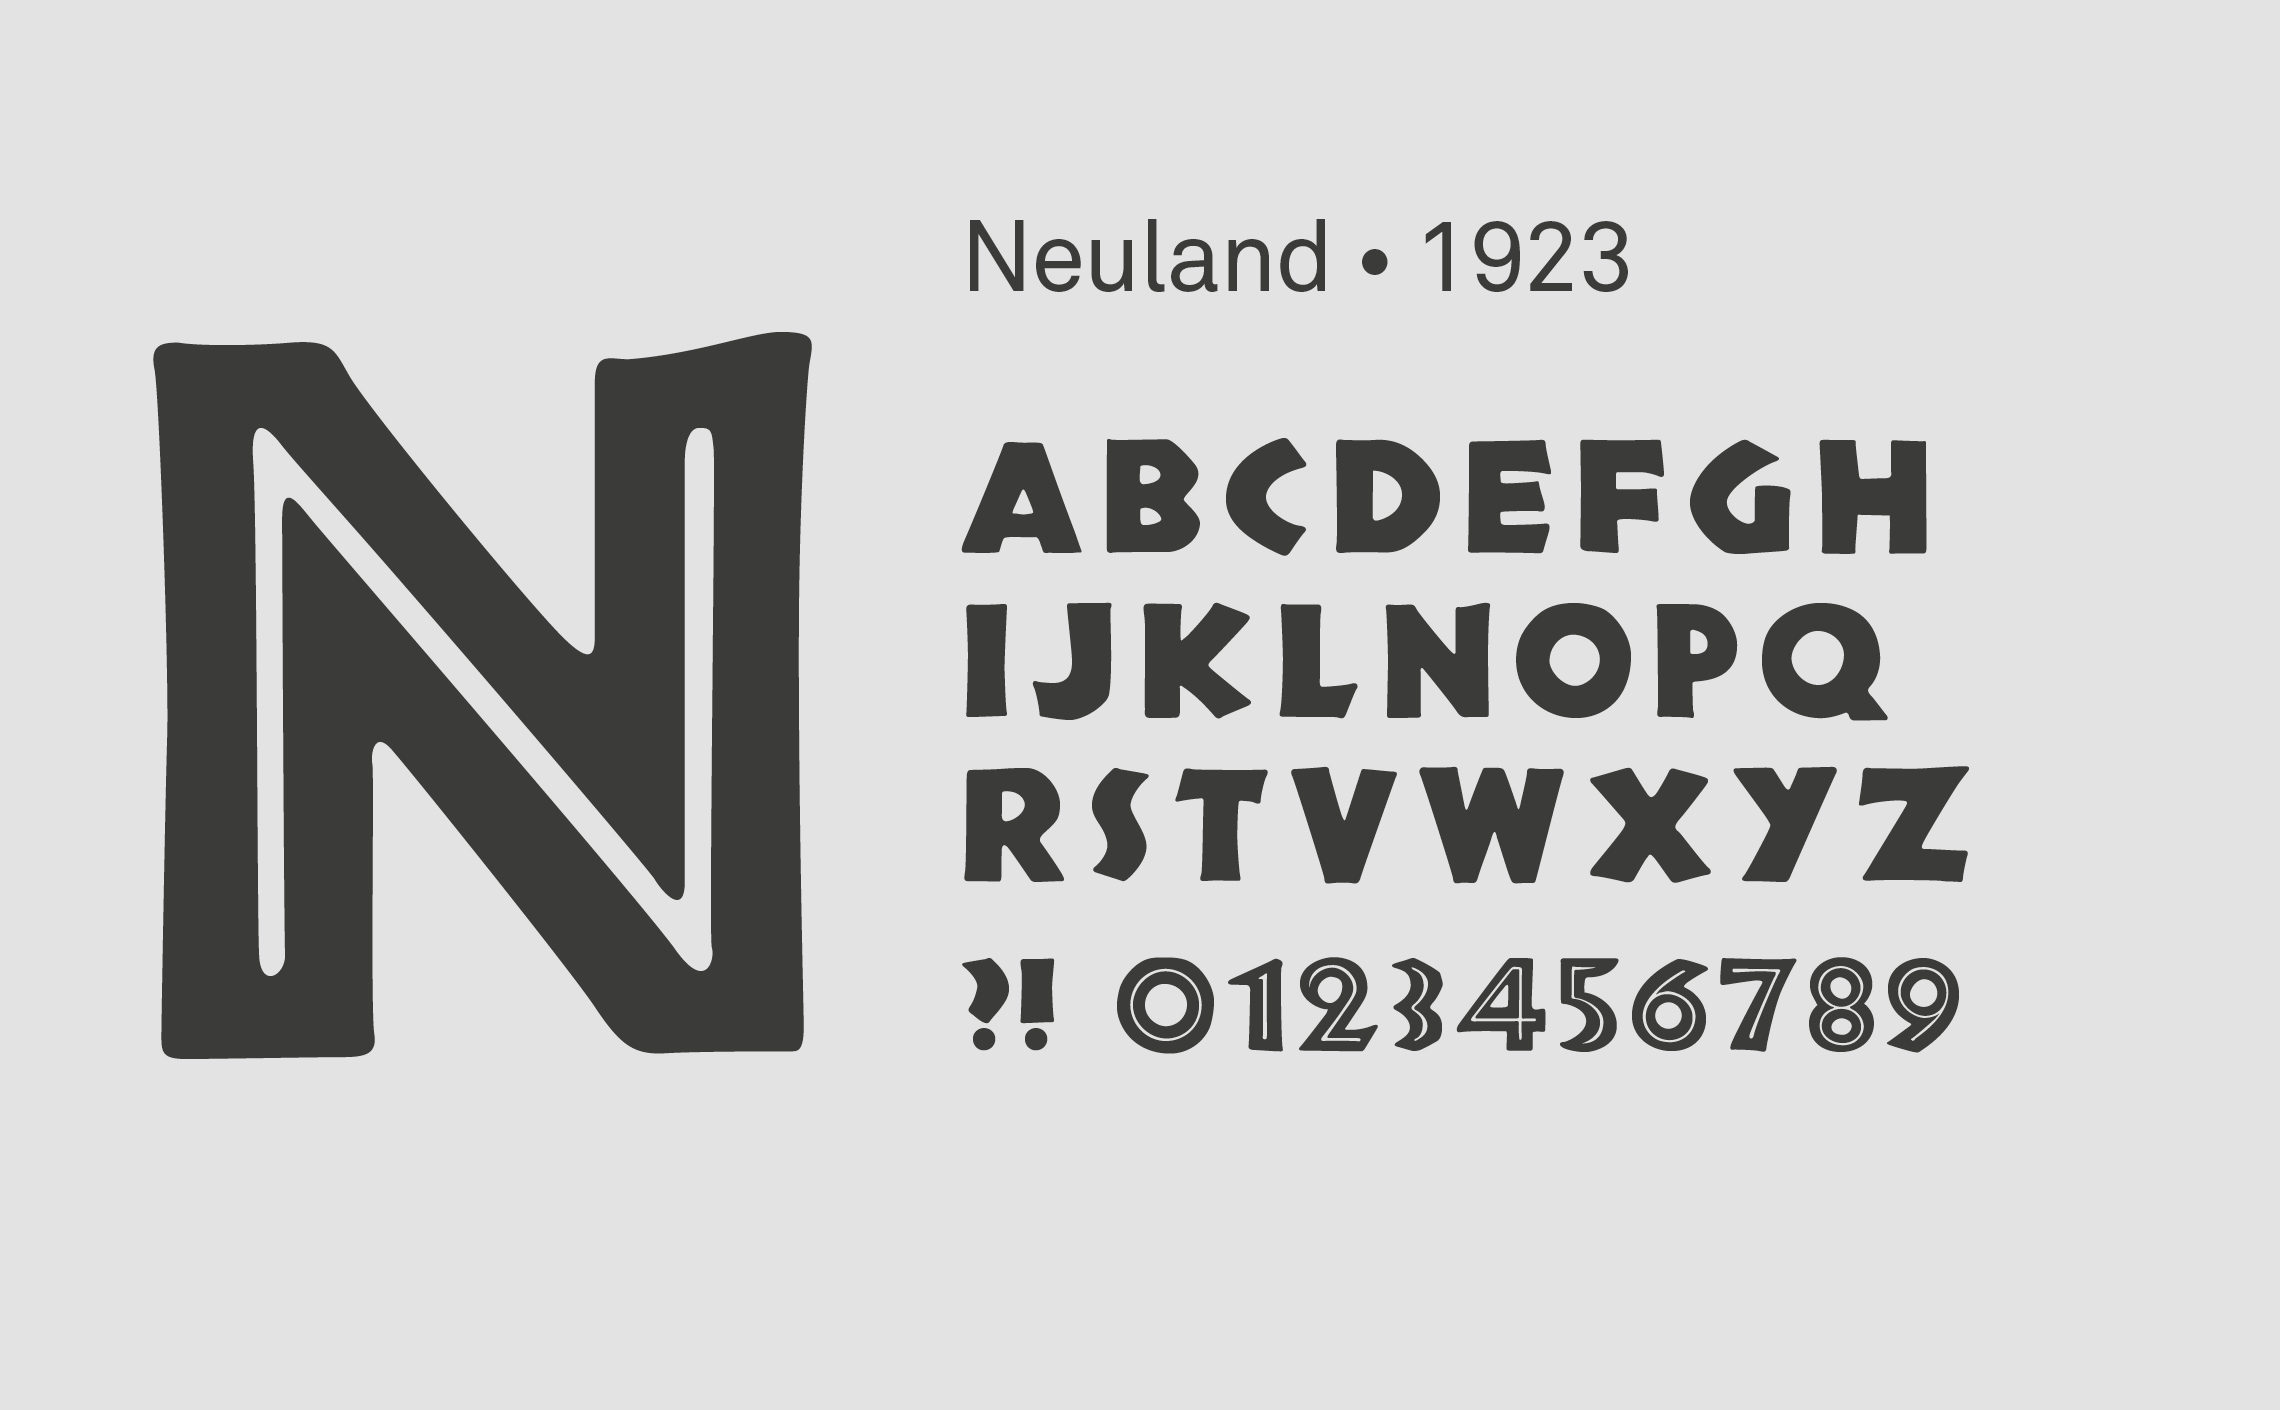 typographie-neuland-stereotypographie-afrique